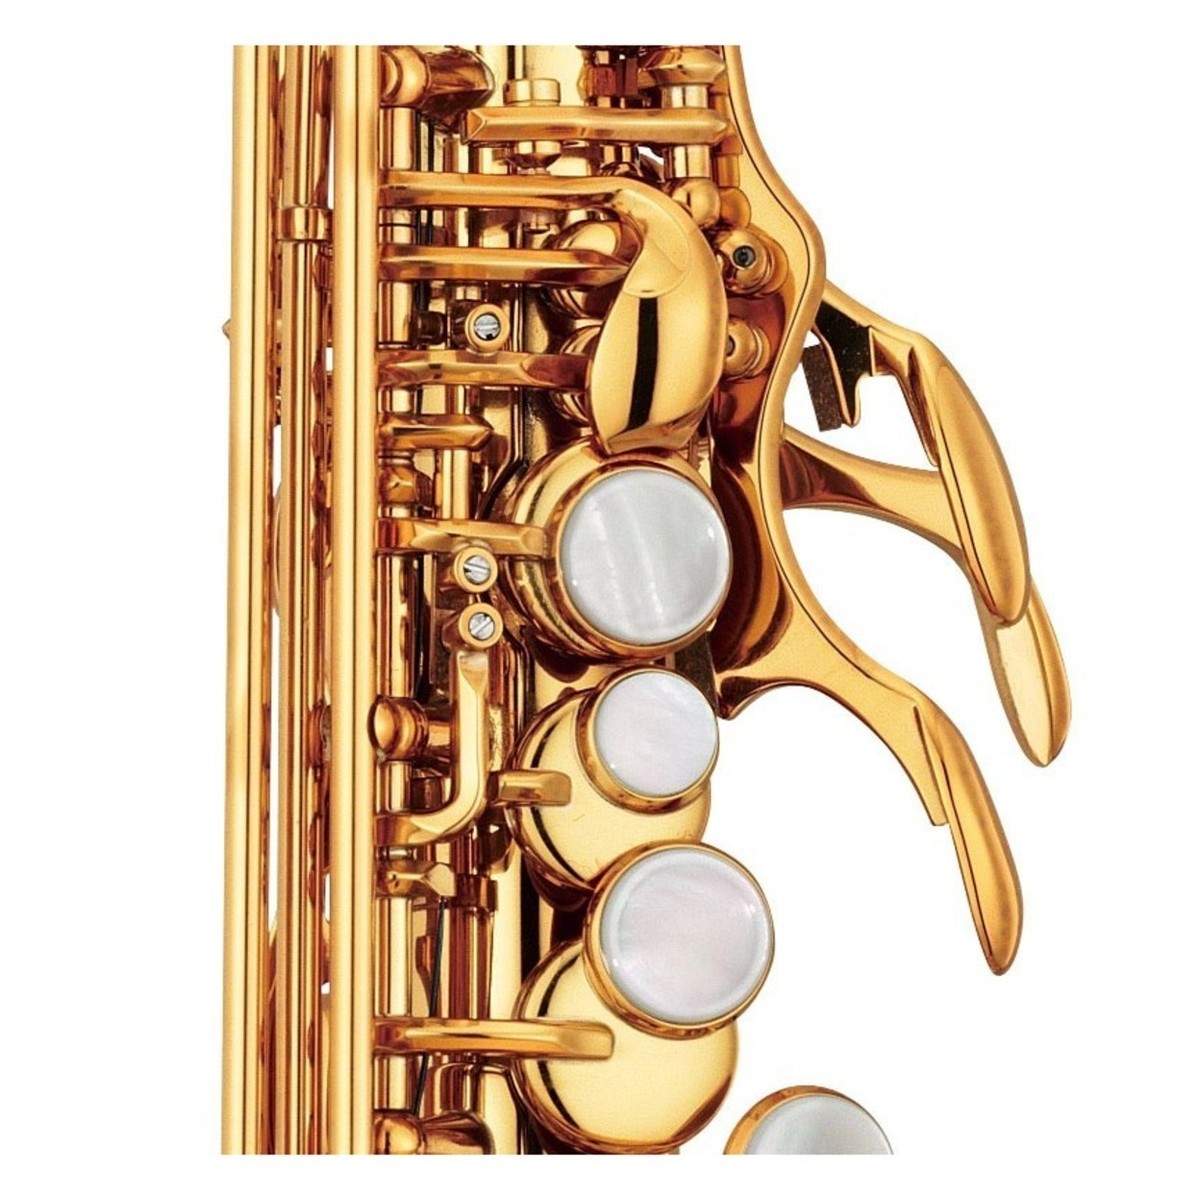 Kèn Saxophone Soprano Yamaha YSS82Z, Unlacquered - Việt Music